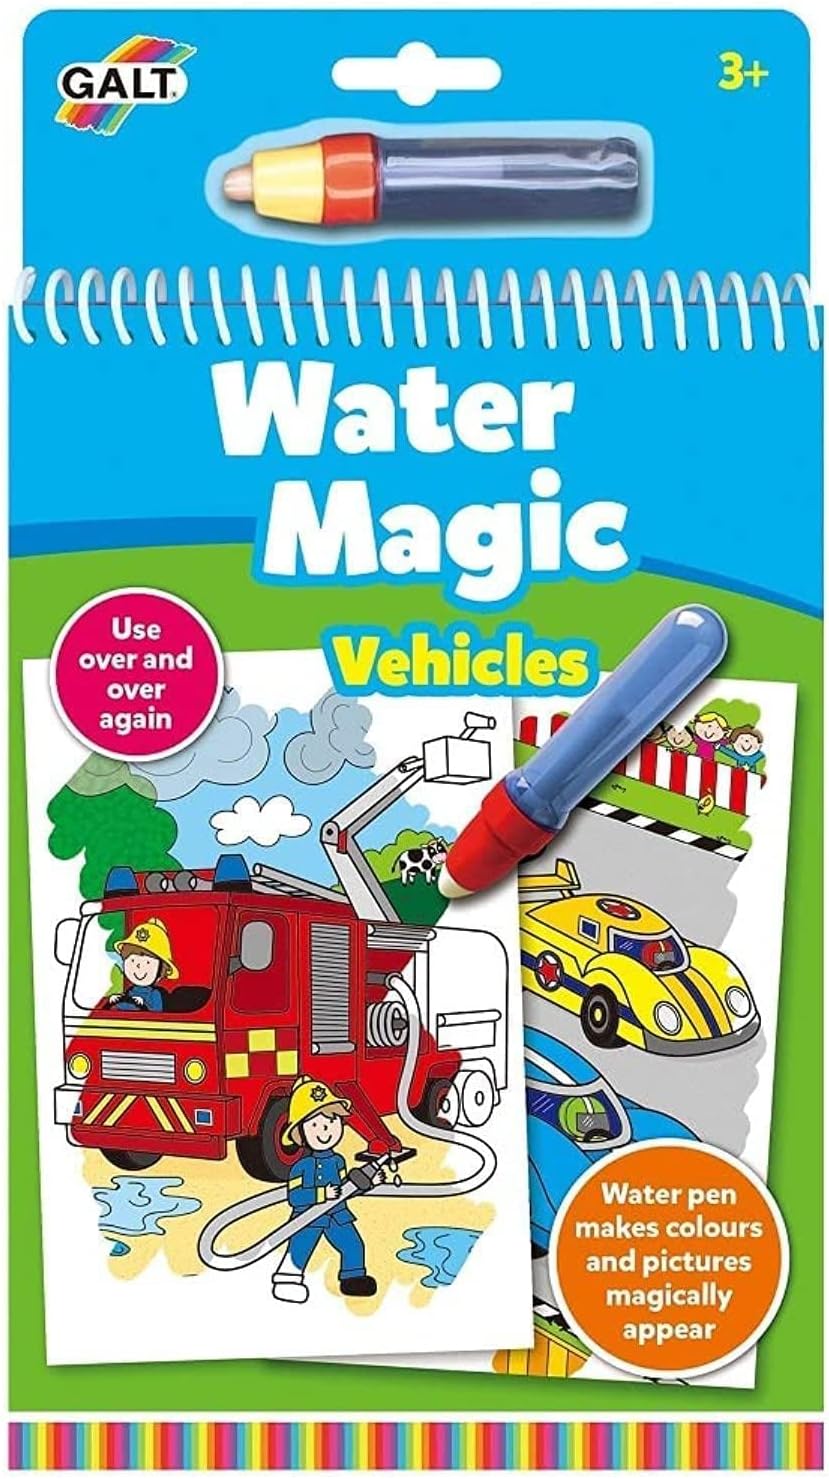 WATER MAGIC VEHICLES